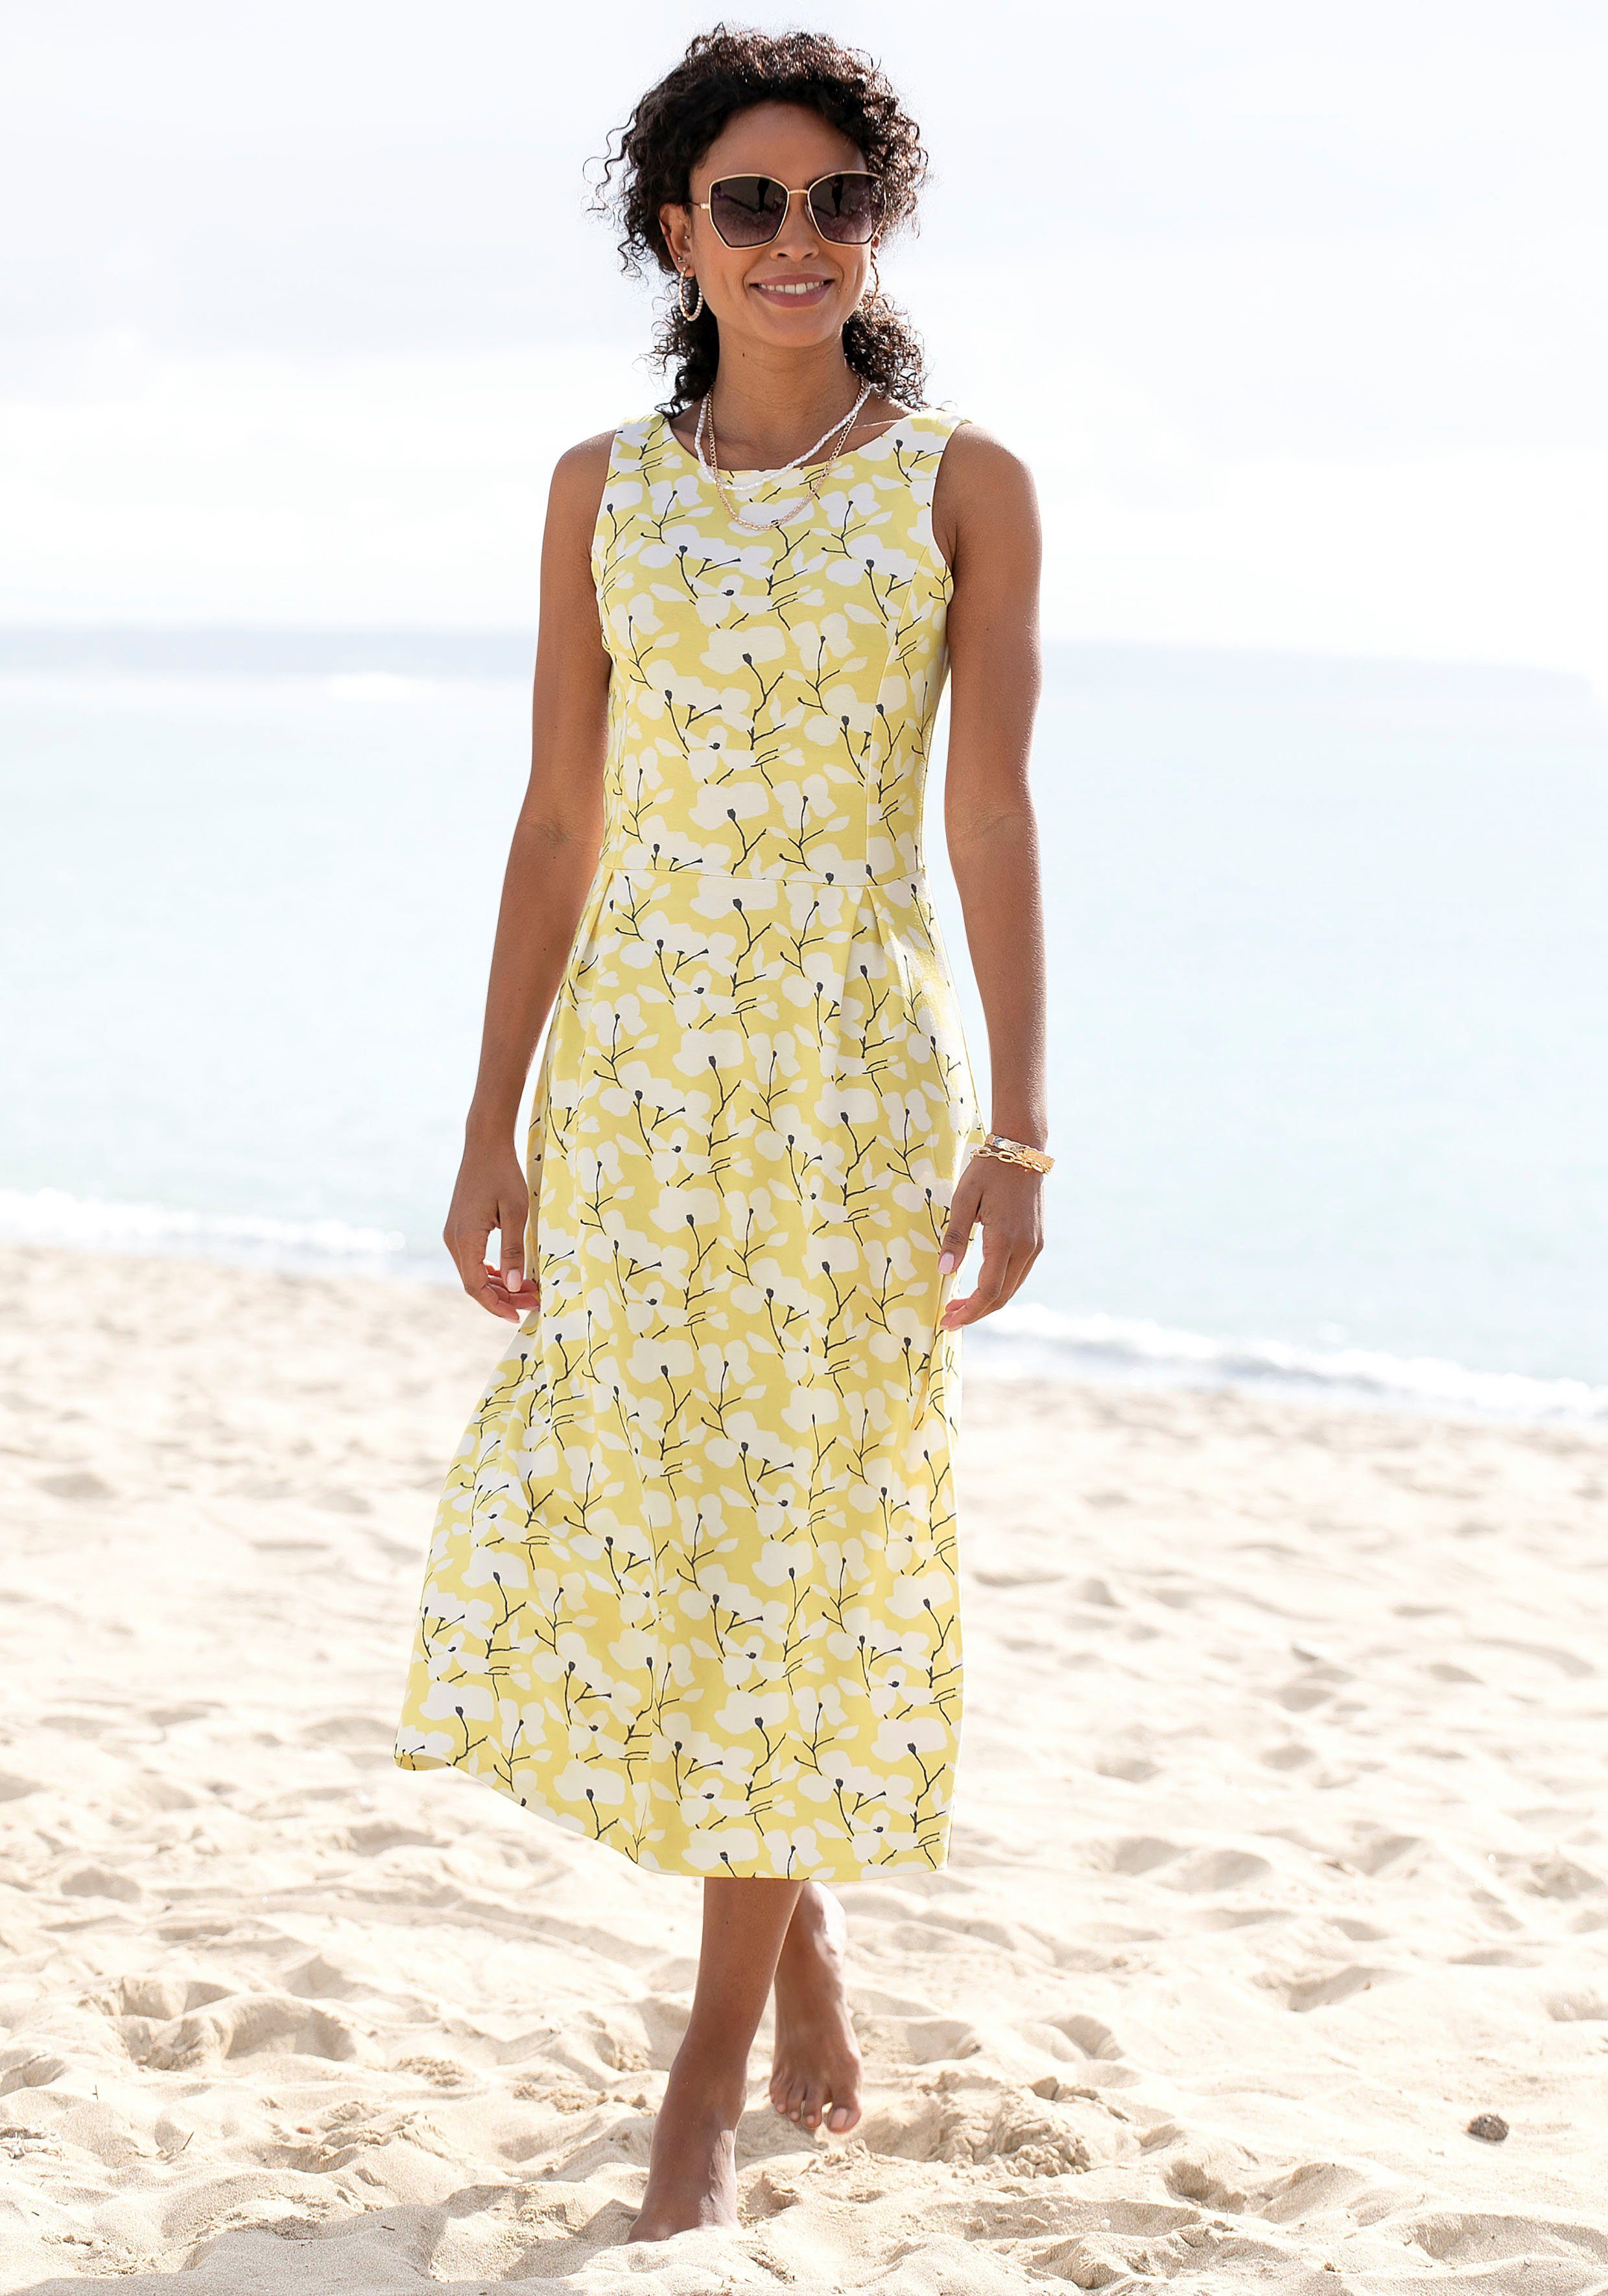 Beachtime Sommerkleid mit Blumendruck, Strandmode, Strandbekleidung